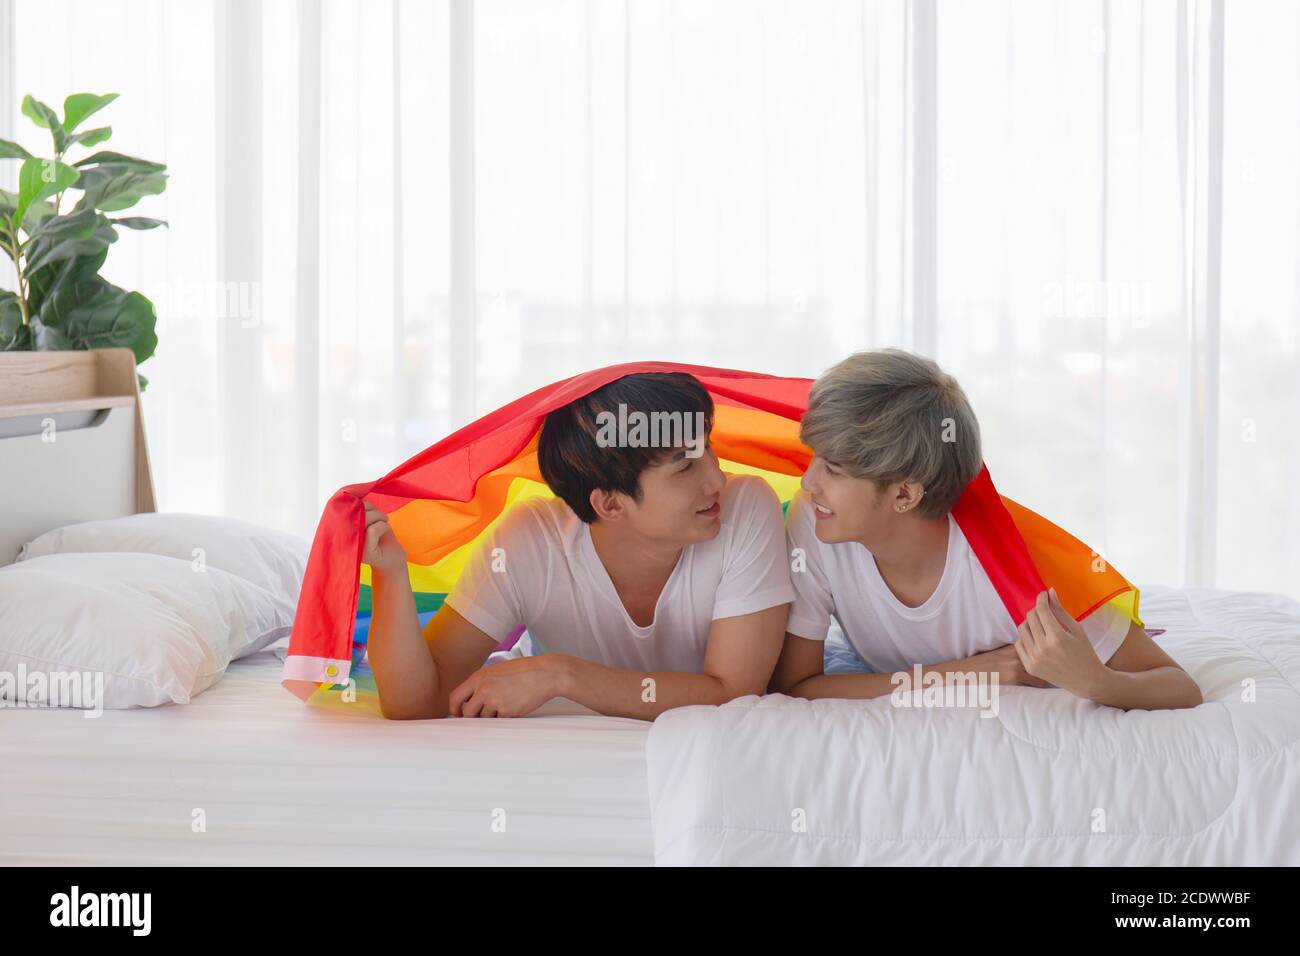 Gay Couples Young Boys Asian Men LGBT Concepts. Stock Photo